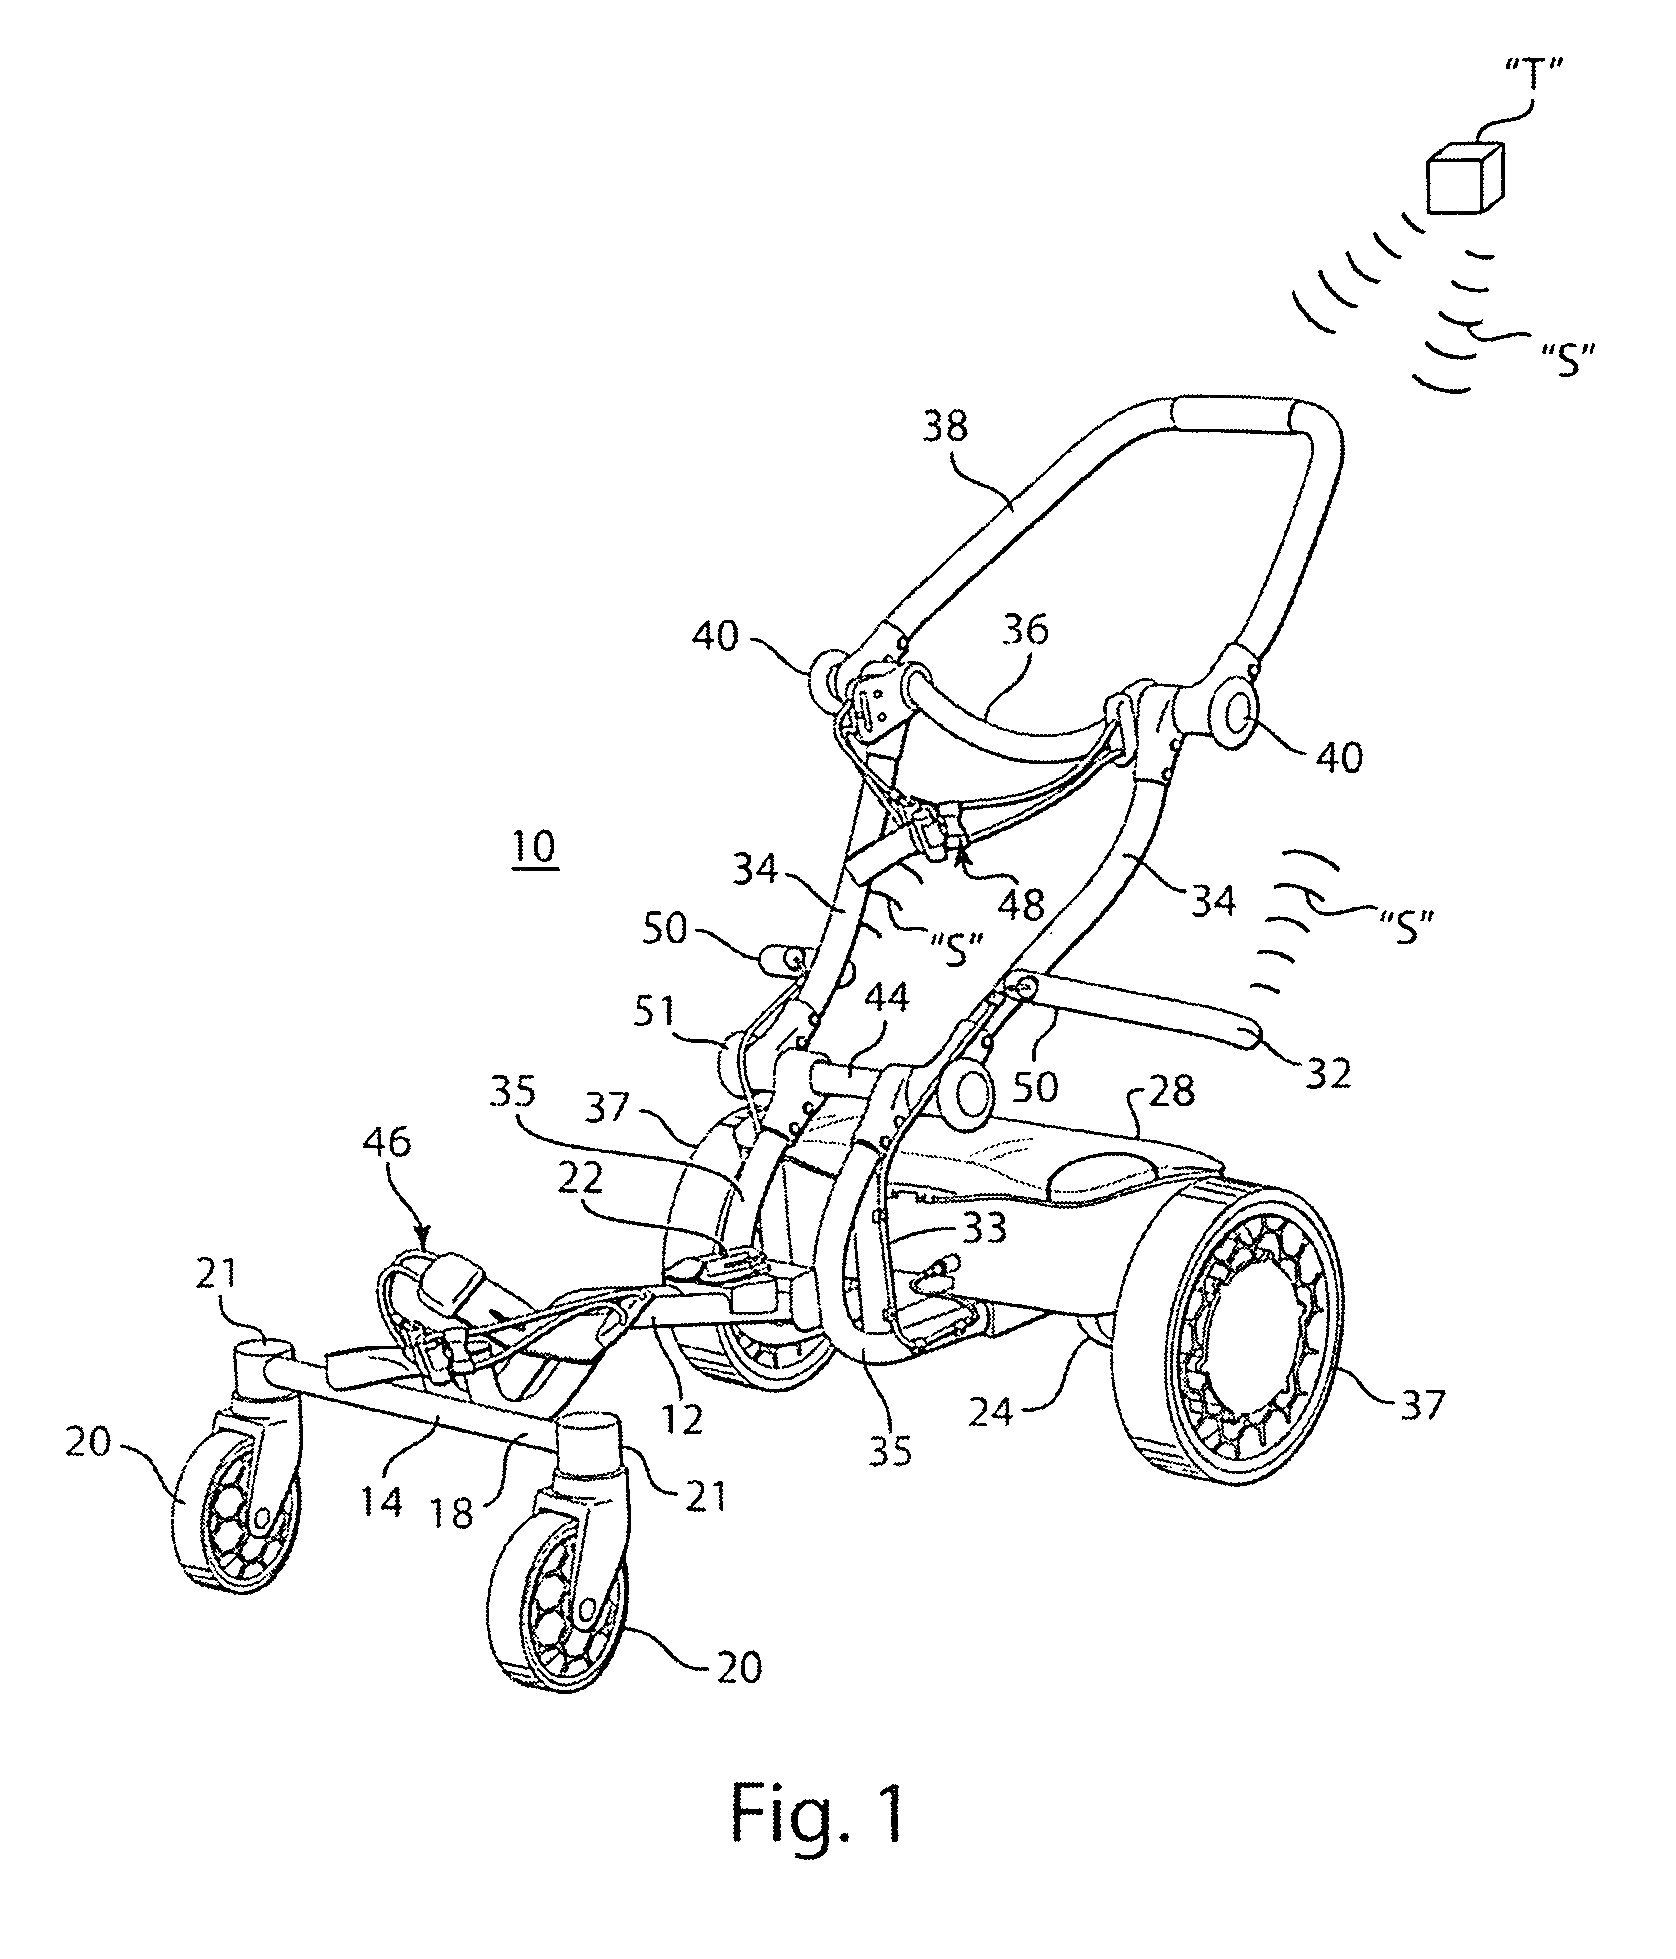 Foldable cart with rear guidance arrangement